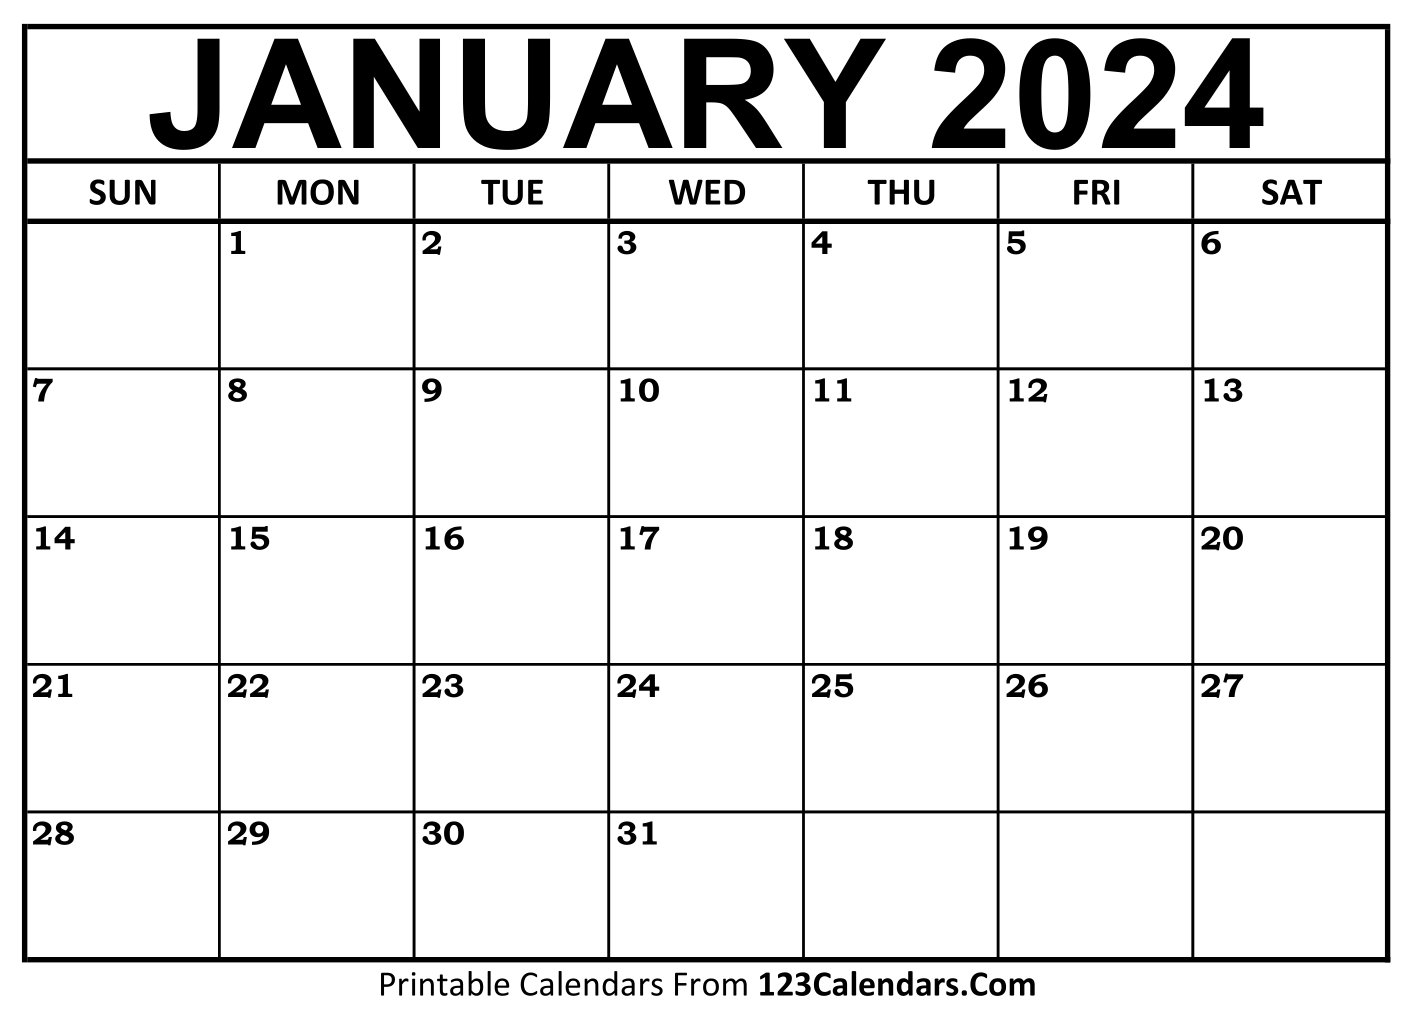 Printable January 2024 Calendar Templates - 123Calendars for January 2024 Free Calendar Printable